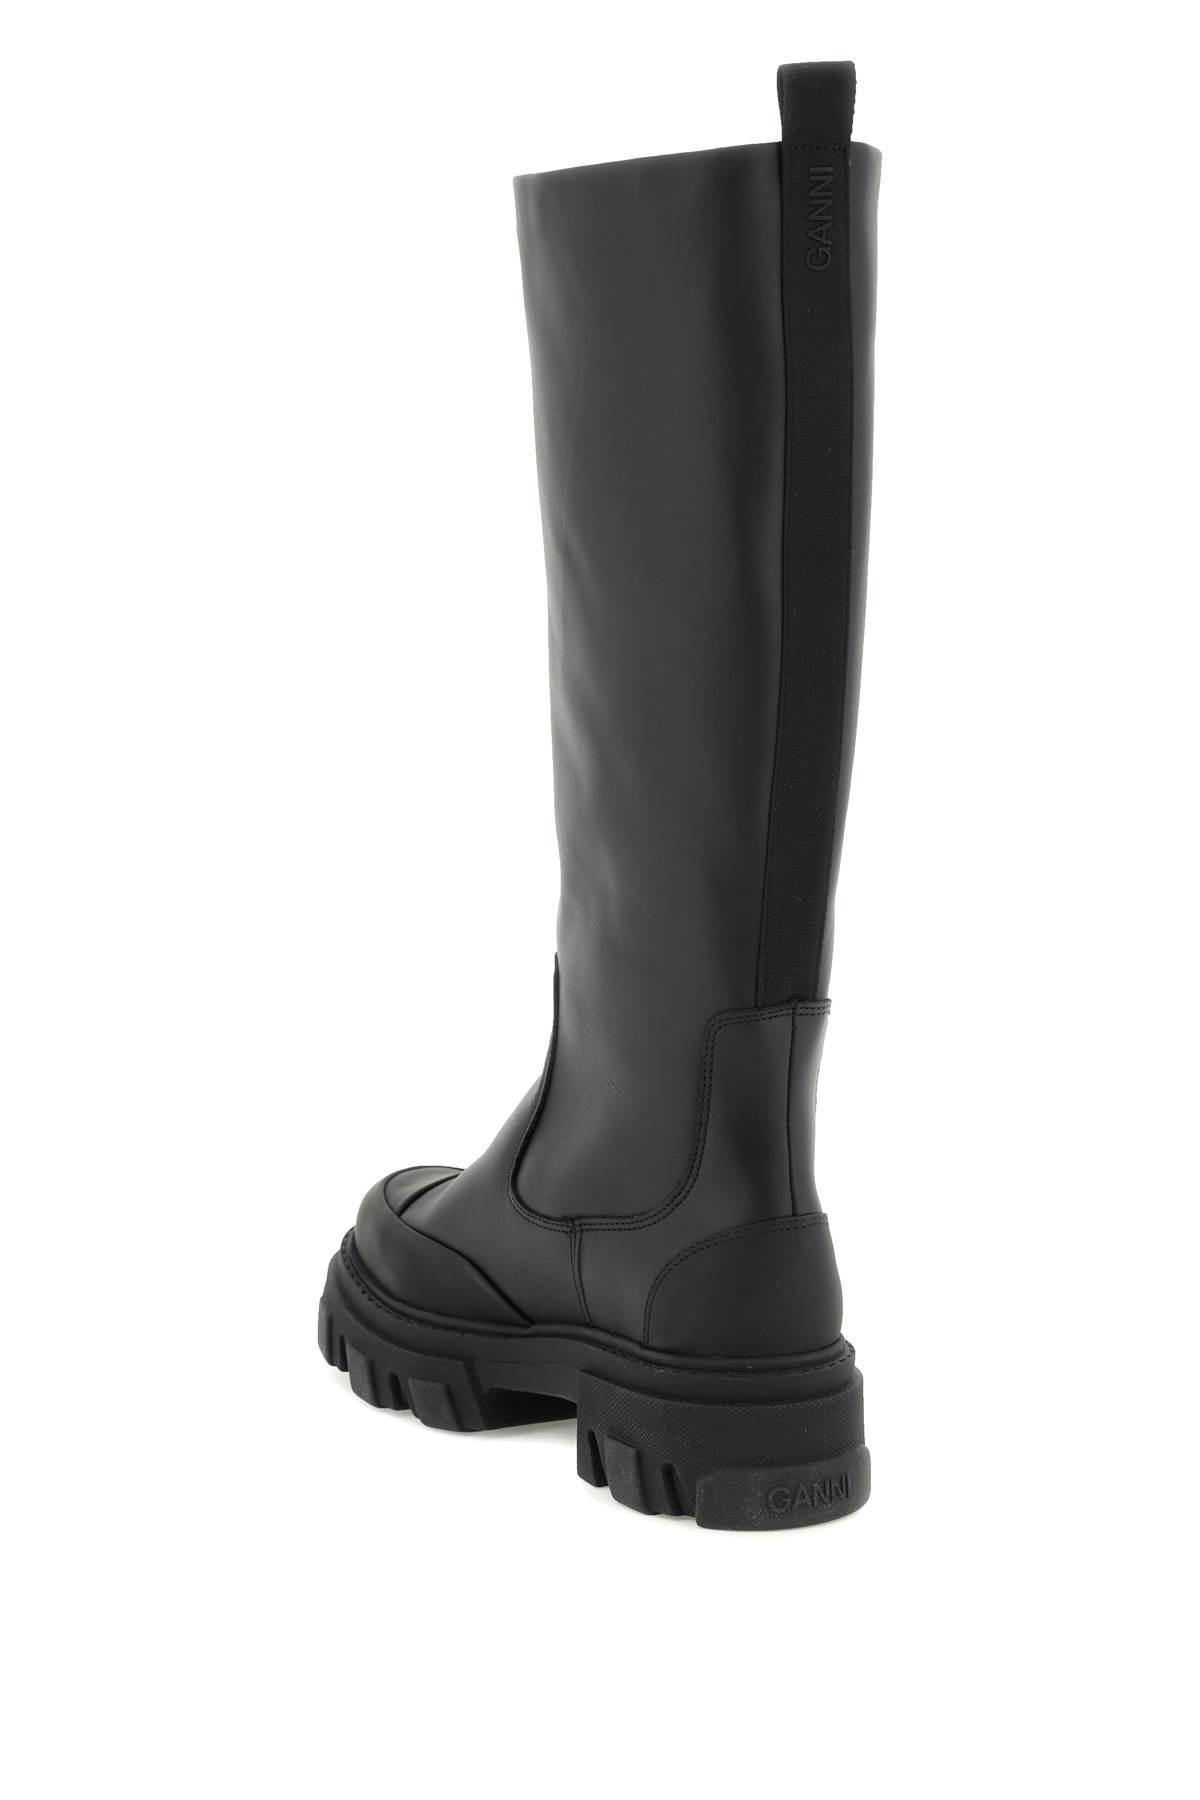 Ganni Tubular Leather Boots in Black | Lyst